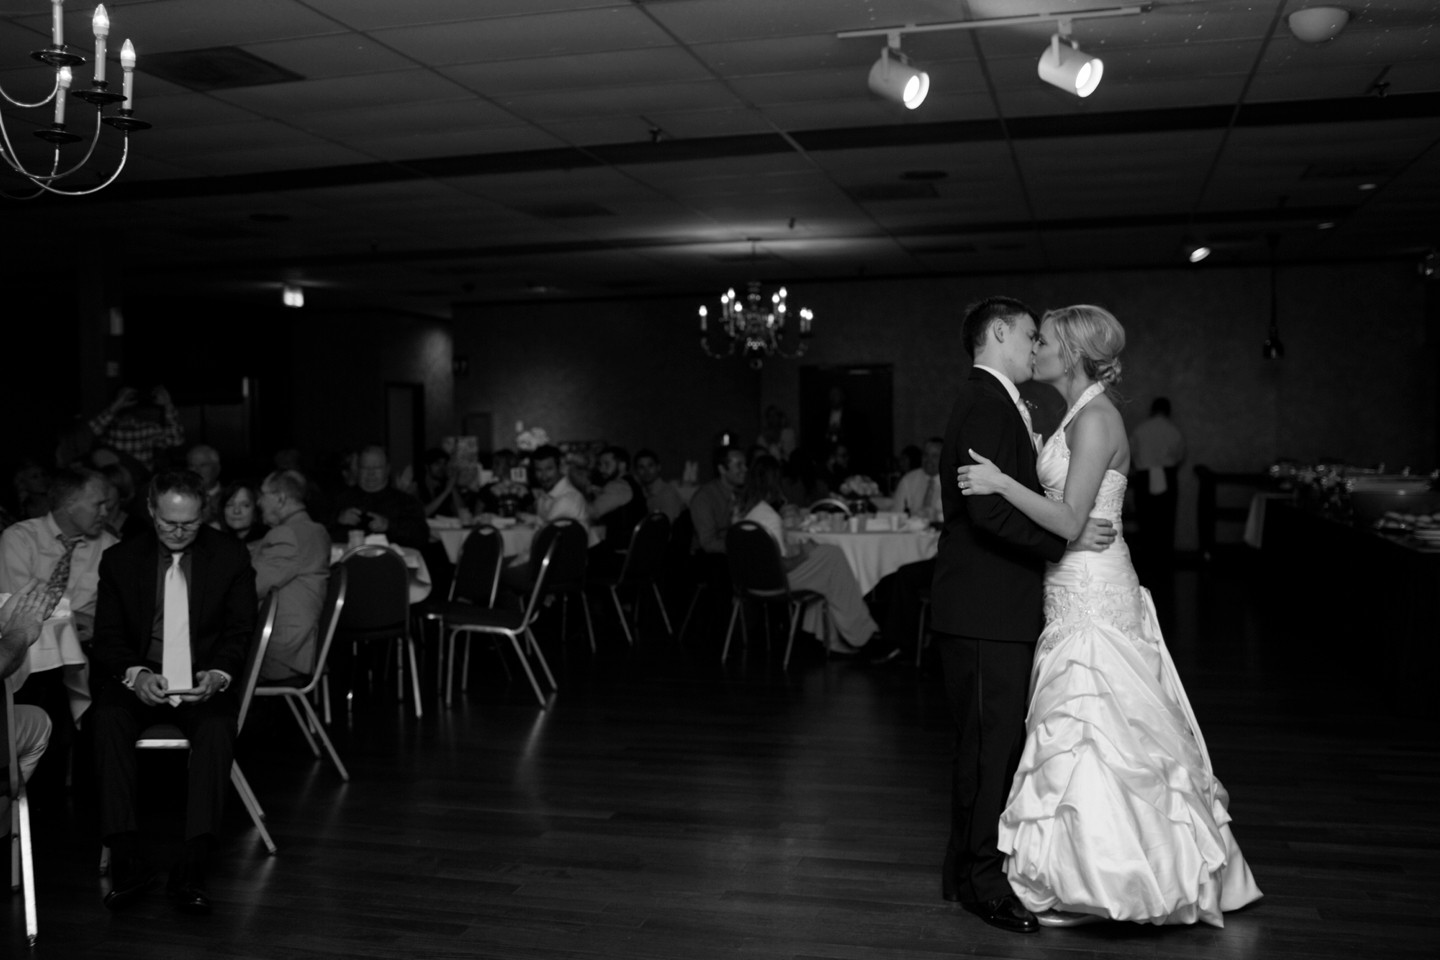 St. Louis Wedding Photography, Faust Park Wedding Photography, Jessica Lauren 